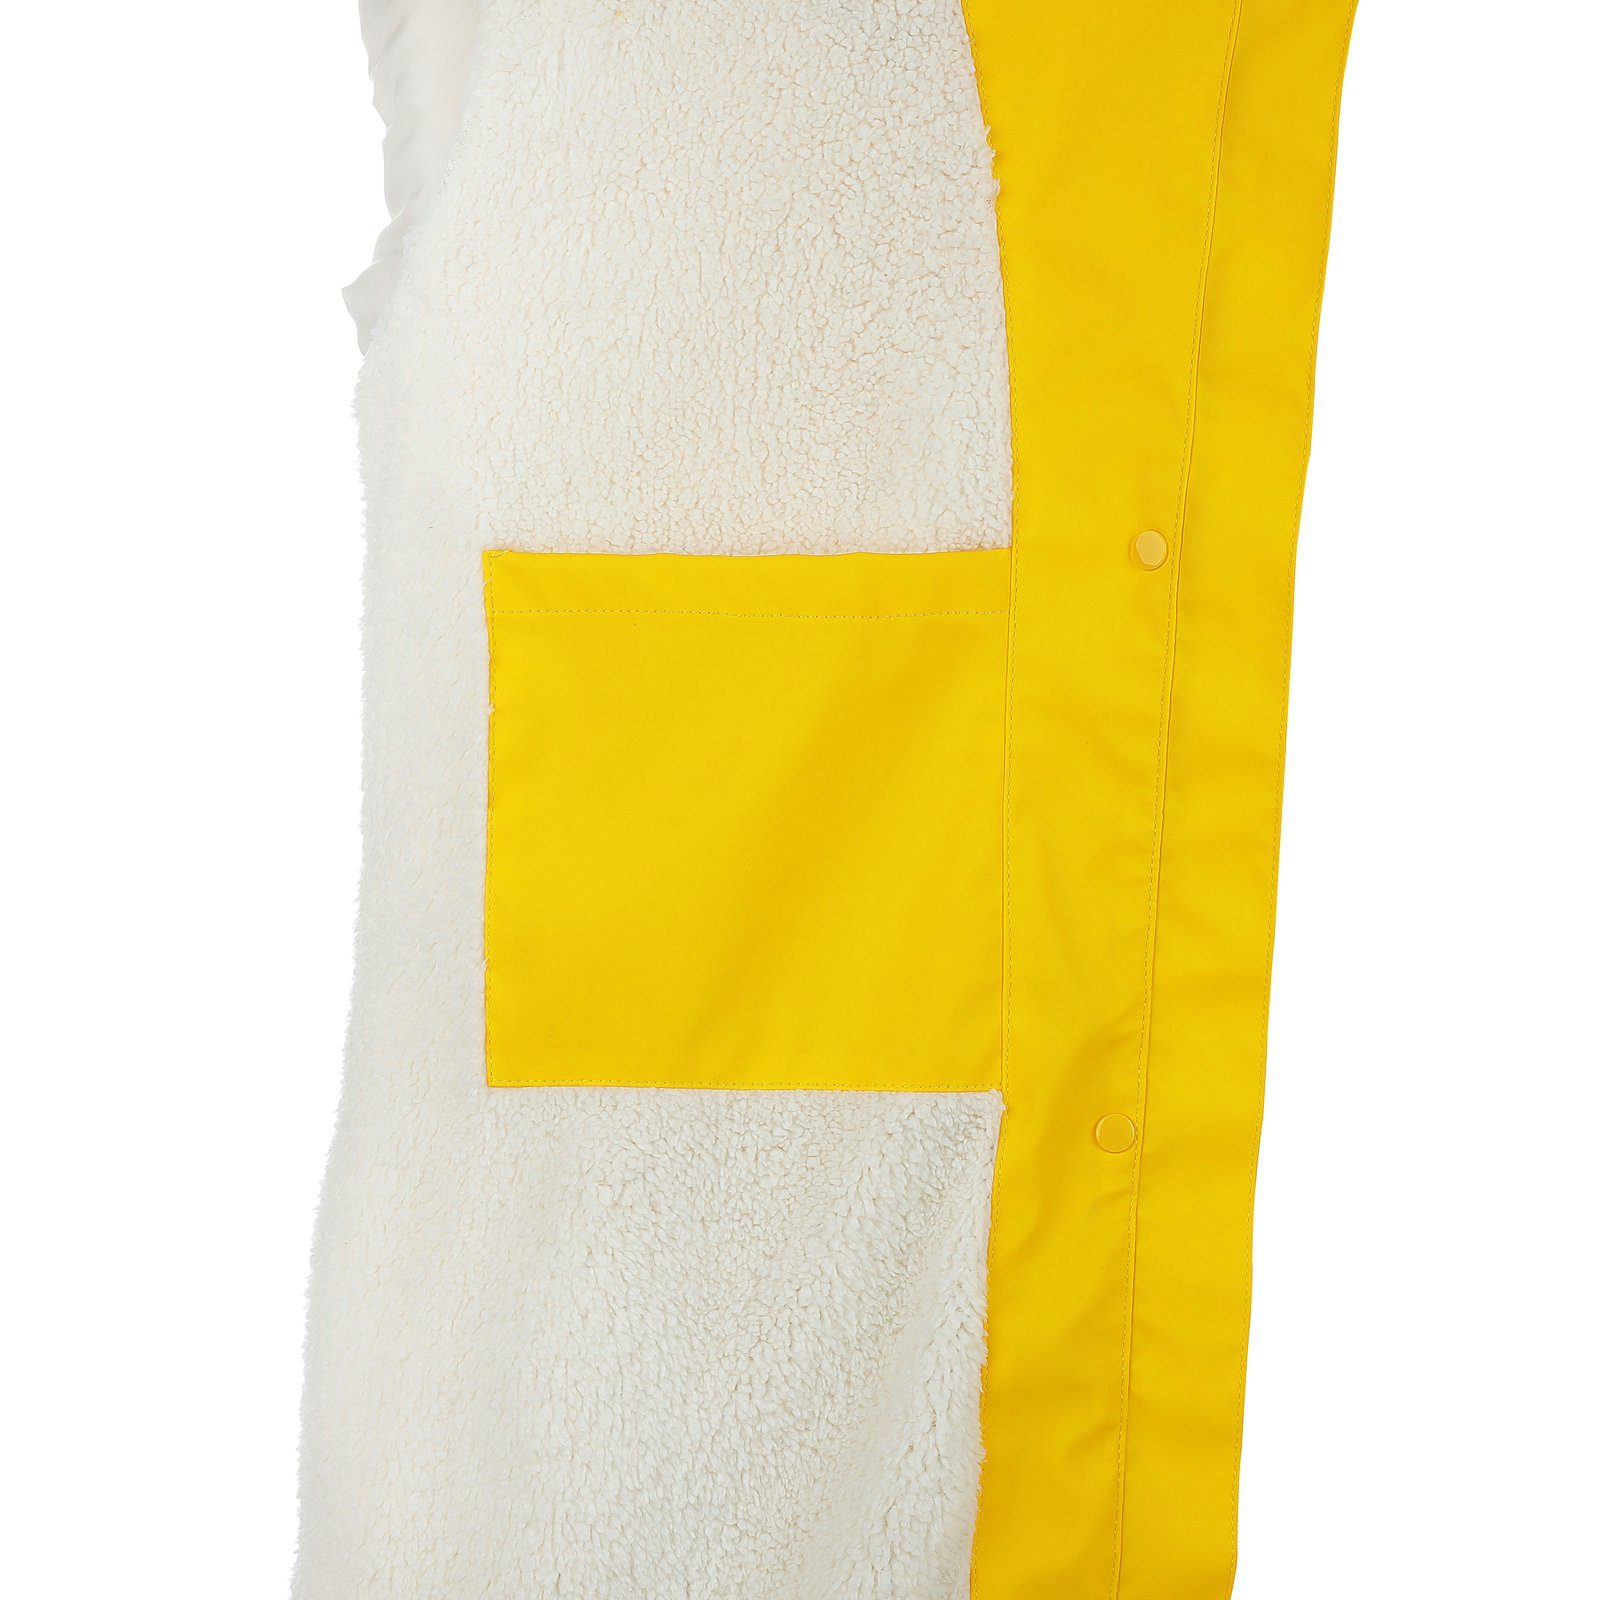 modAS Regenjacke Damen Regenmantel aus Wasserdichte Teddy-Fleece-Futter gelb mit - Jacke PU